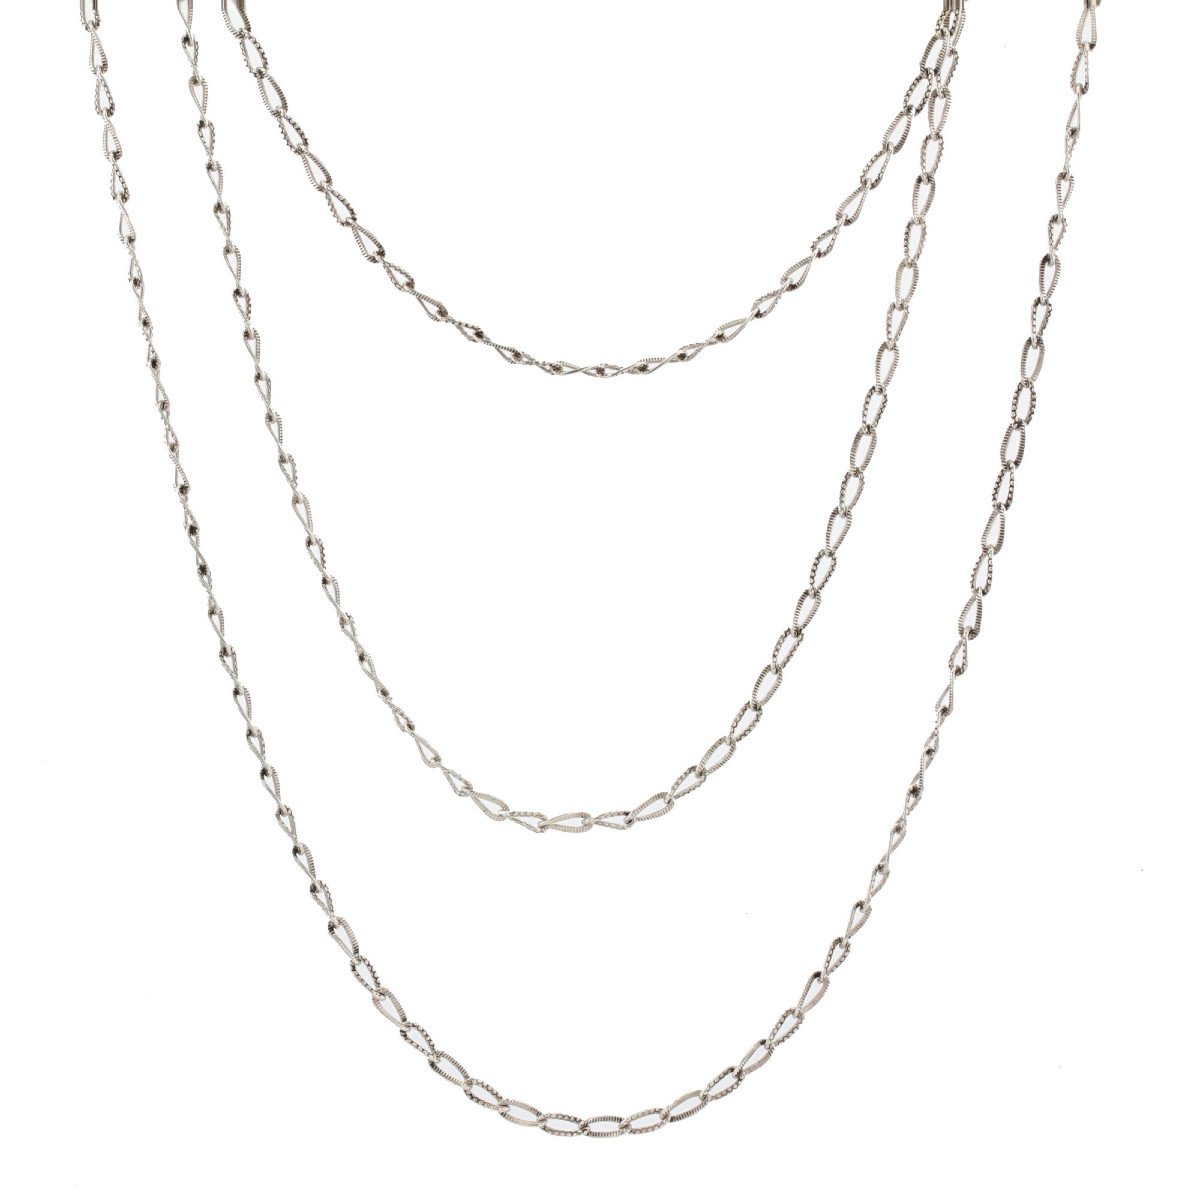 Antique Chiseled Silver Long Necklace